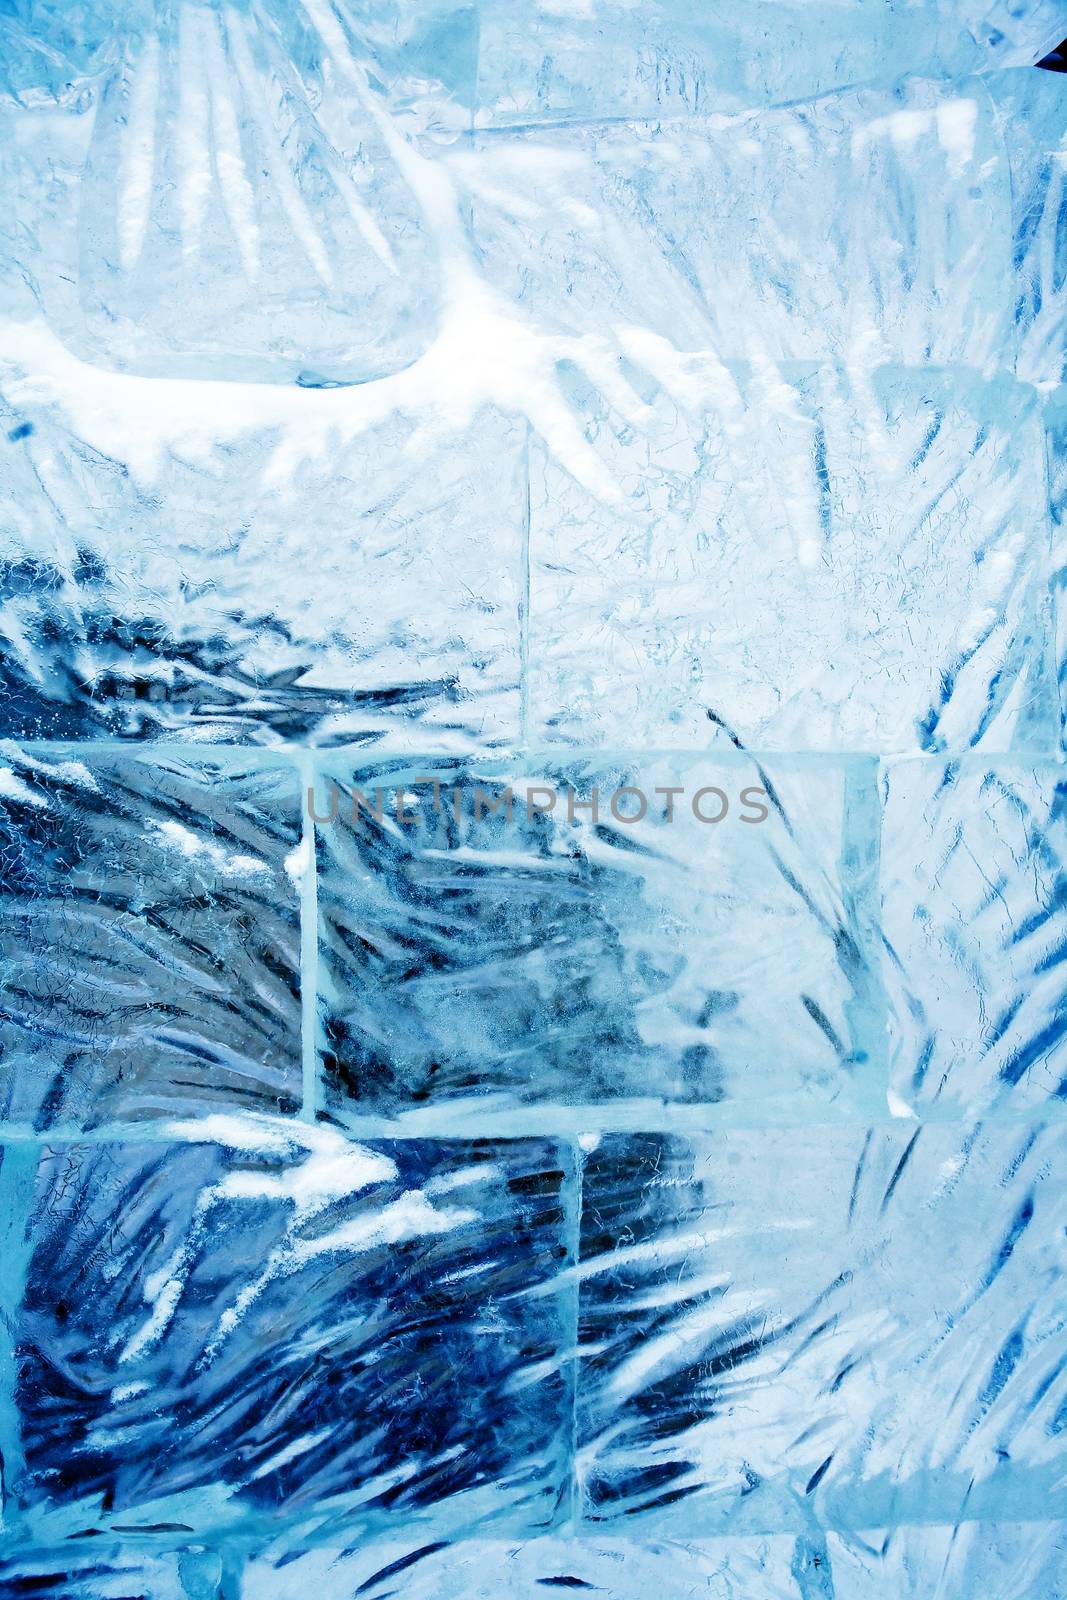 Ice Wall Closeup by kvkirillov